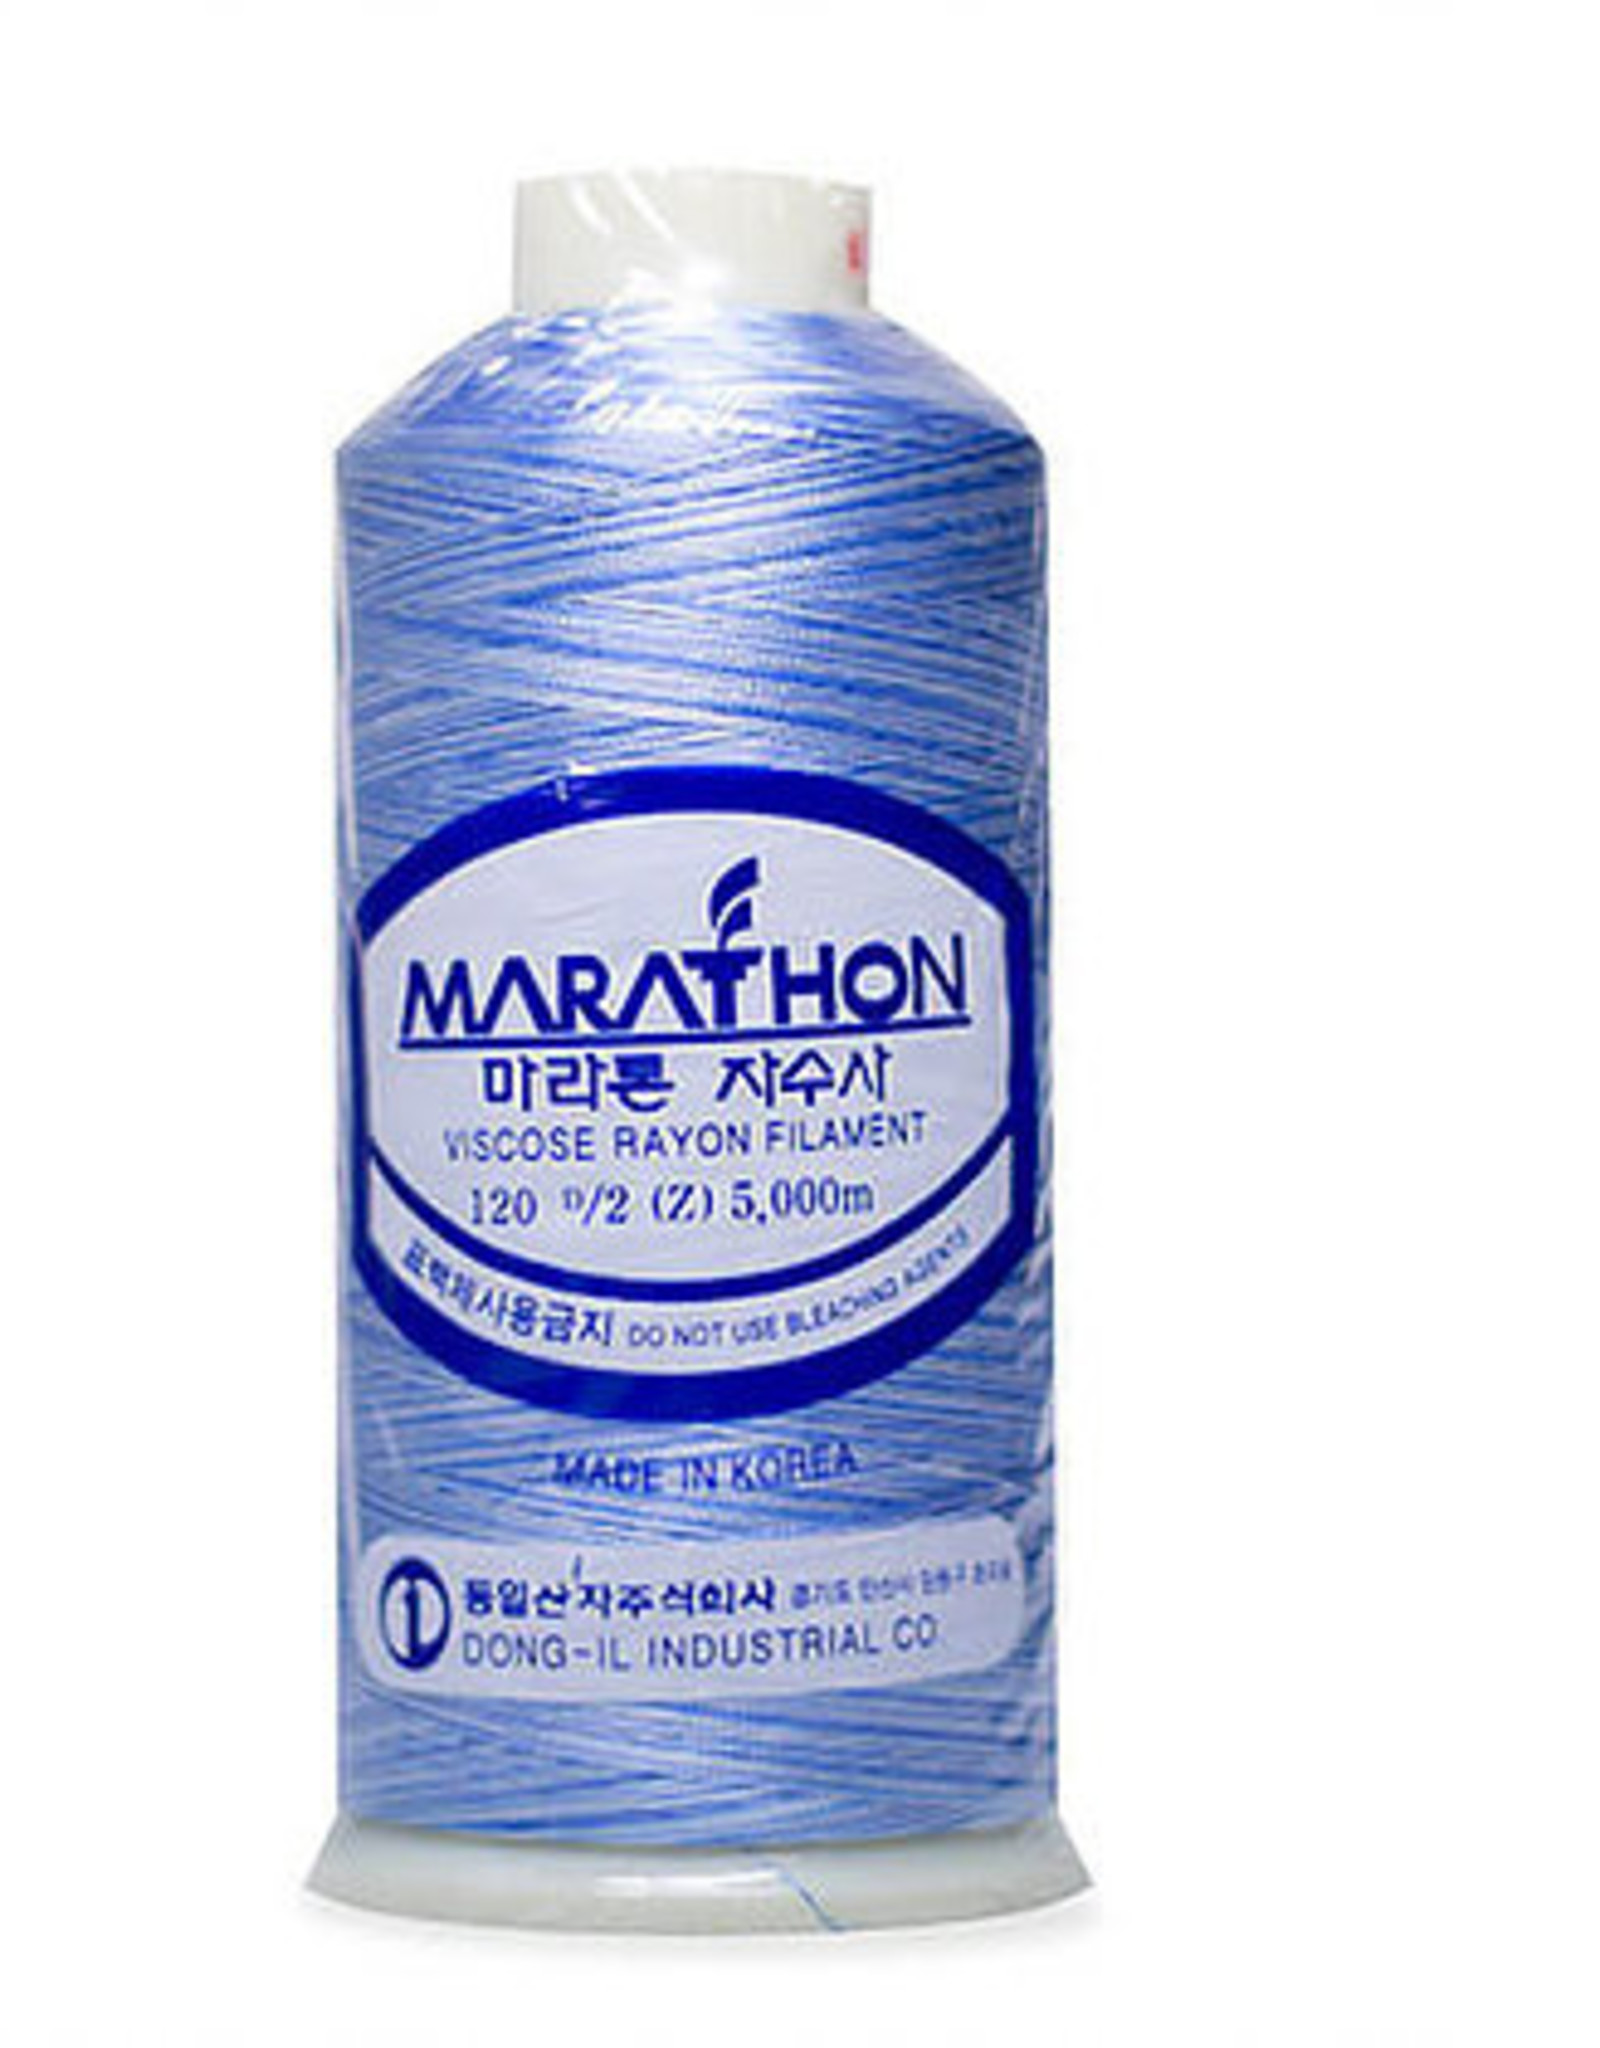 Marathon embroidery (1000)- 5508